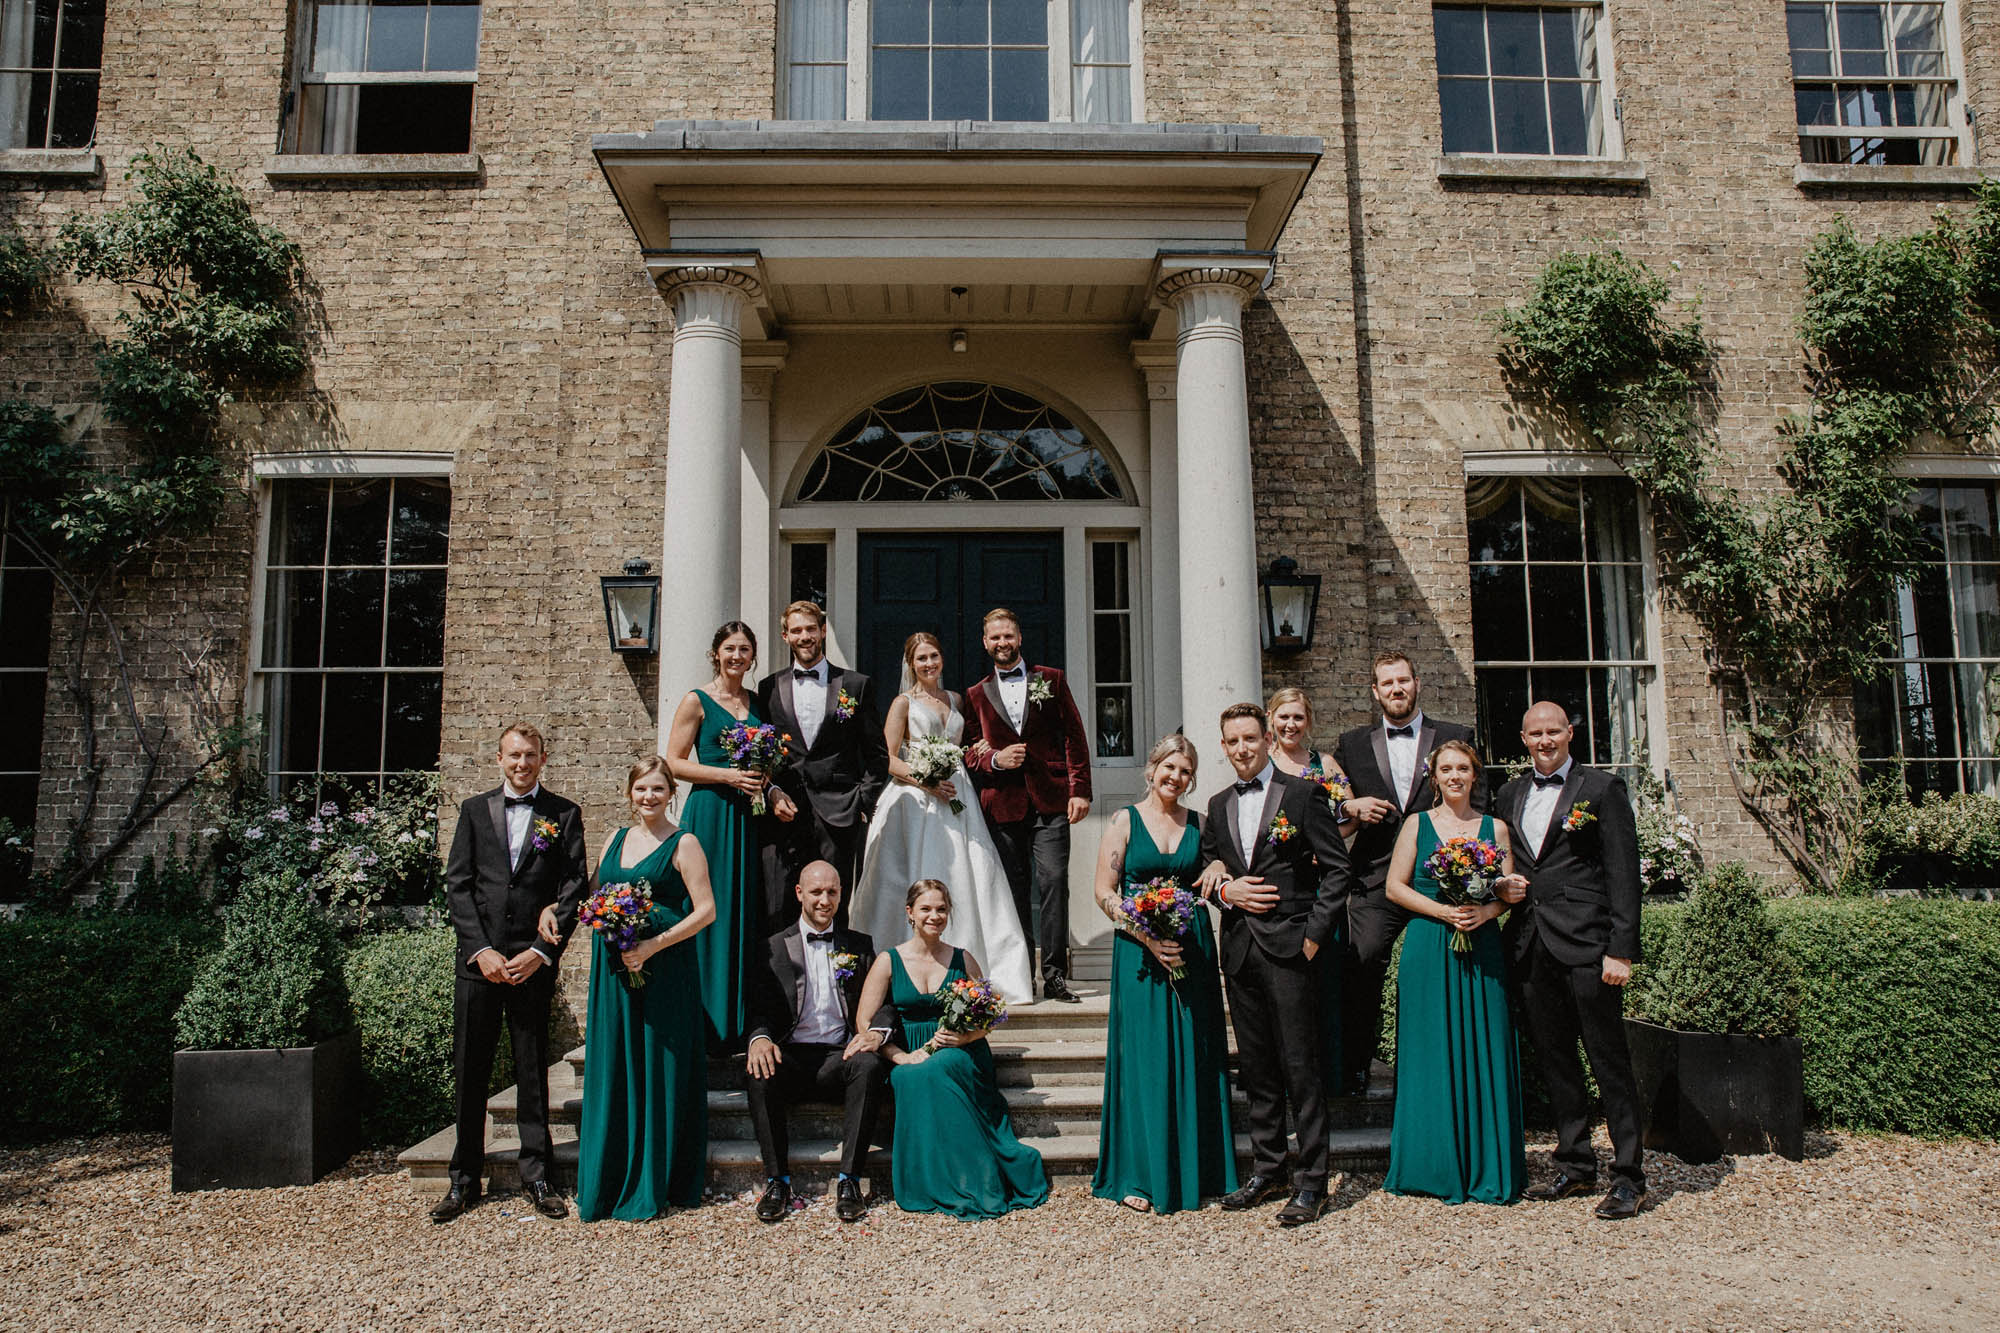 Bedfordshire manor house wedding venue Shortmead wedding group photo